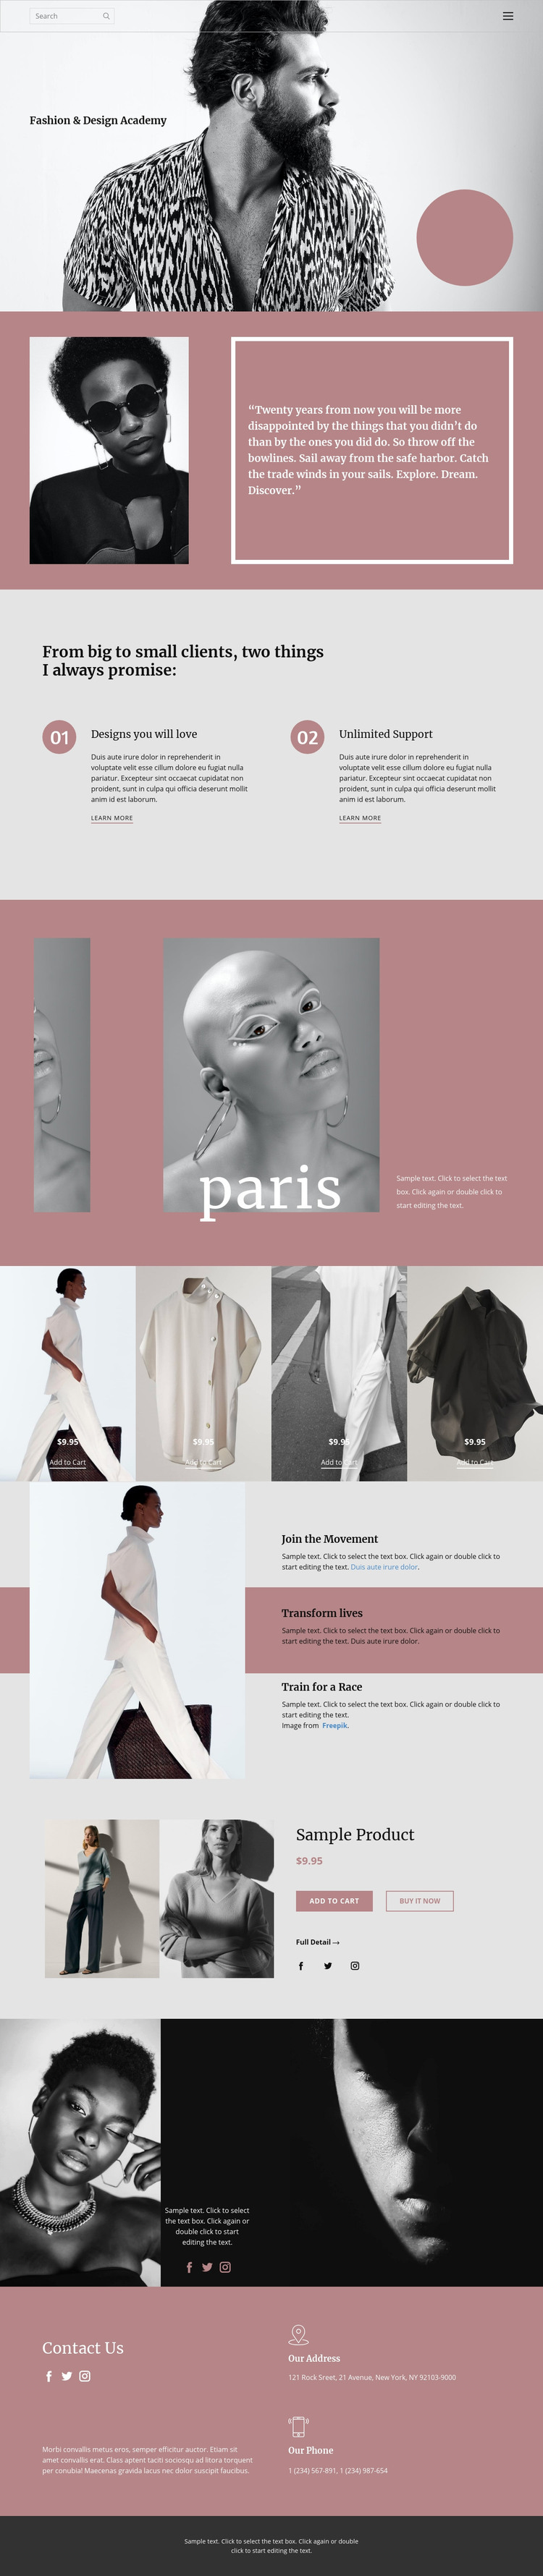 Fashion studio Homepage Design